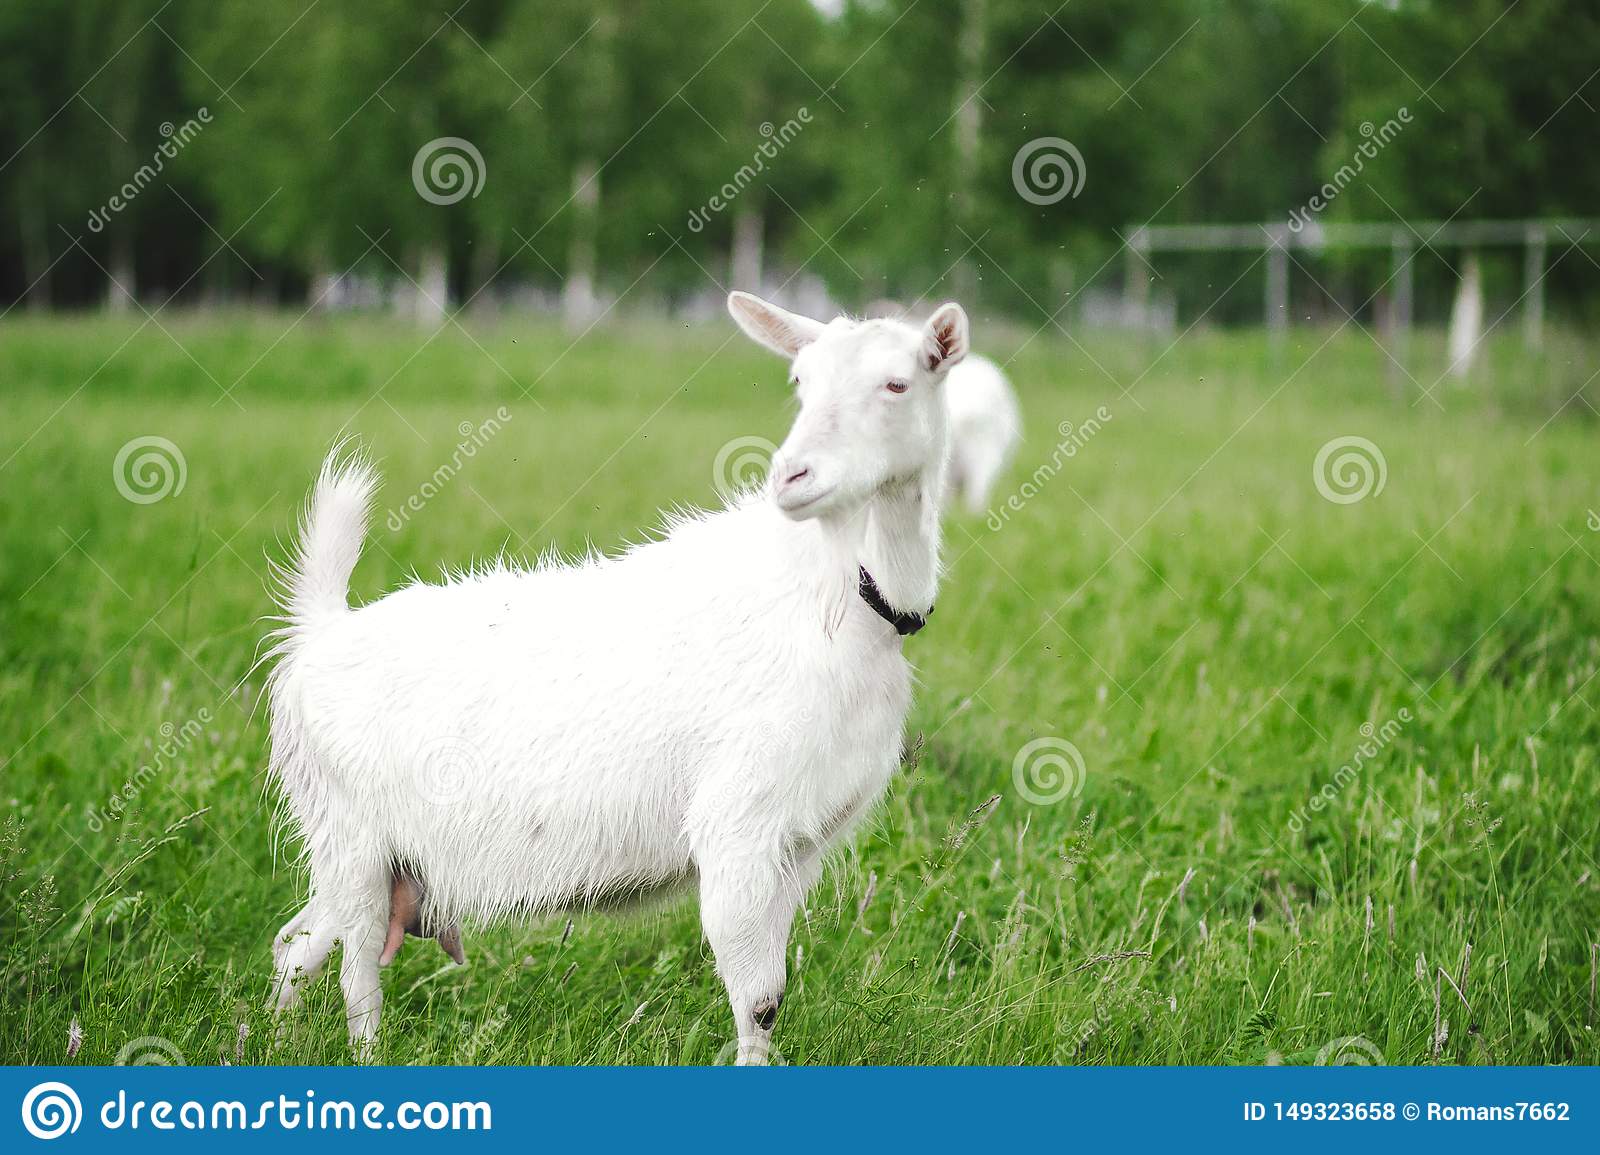 Домашняя коза — википедия переиздание // wiki 2